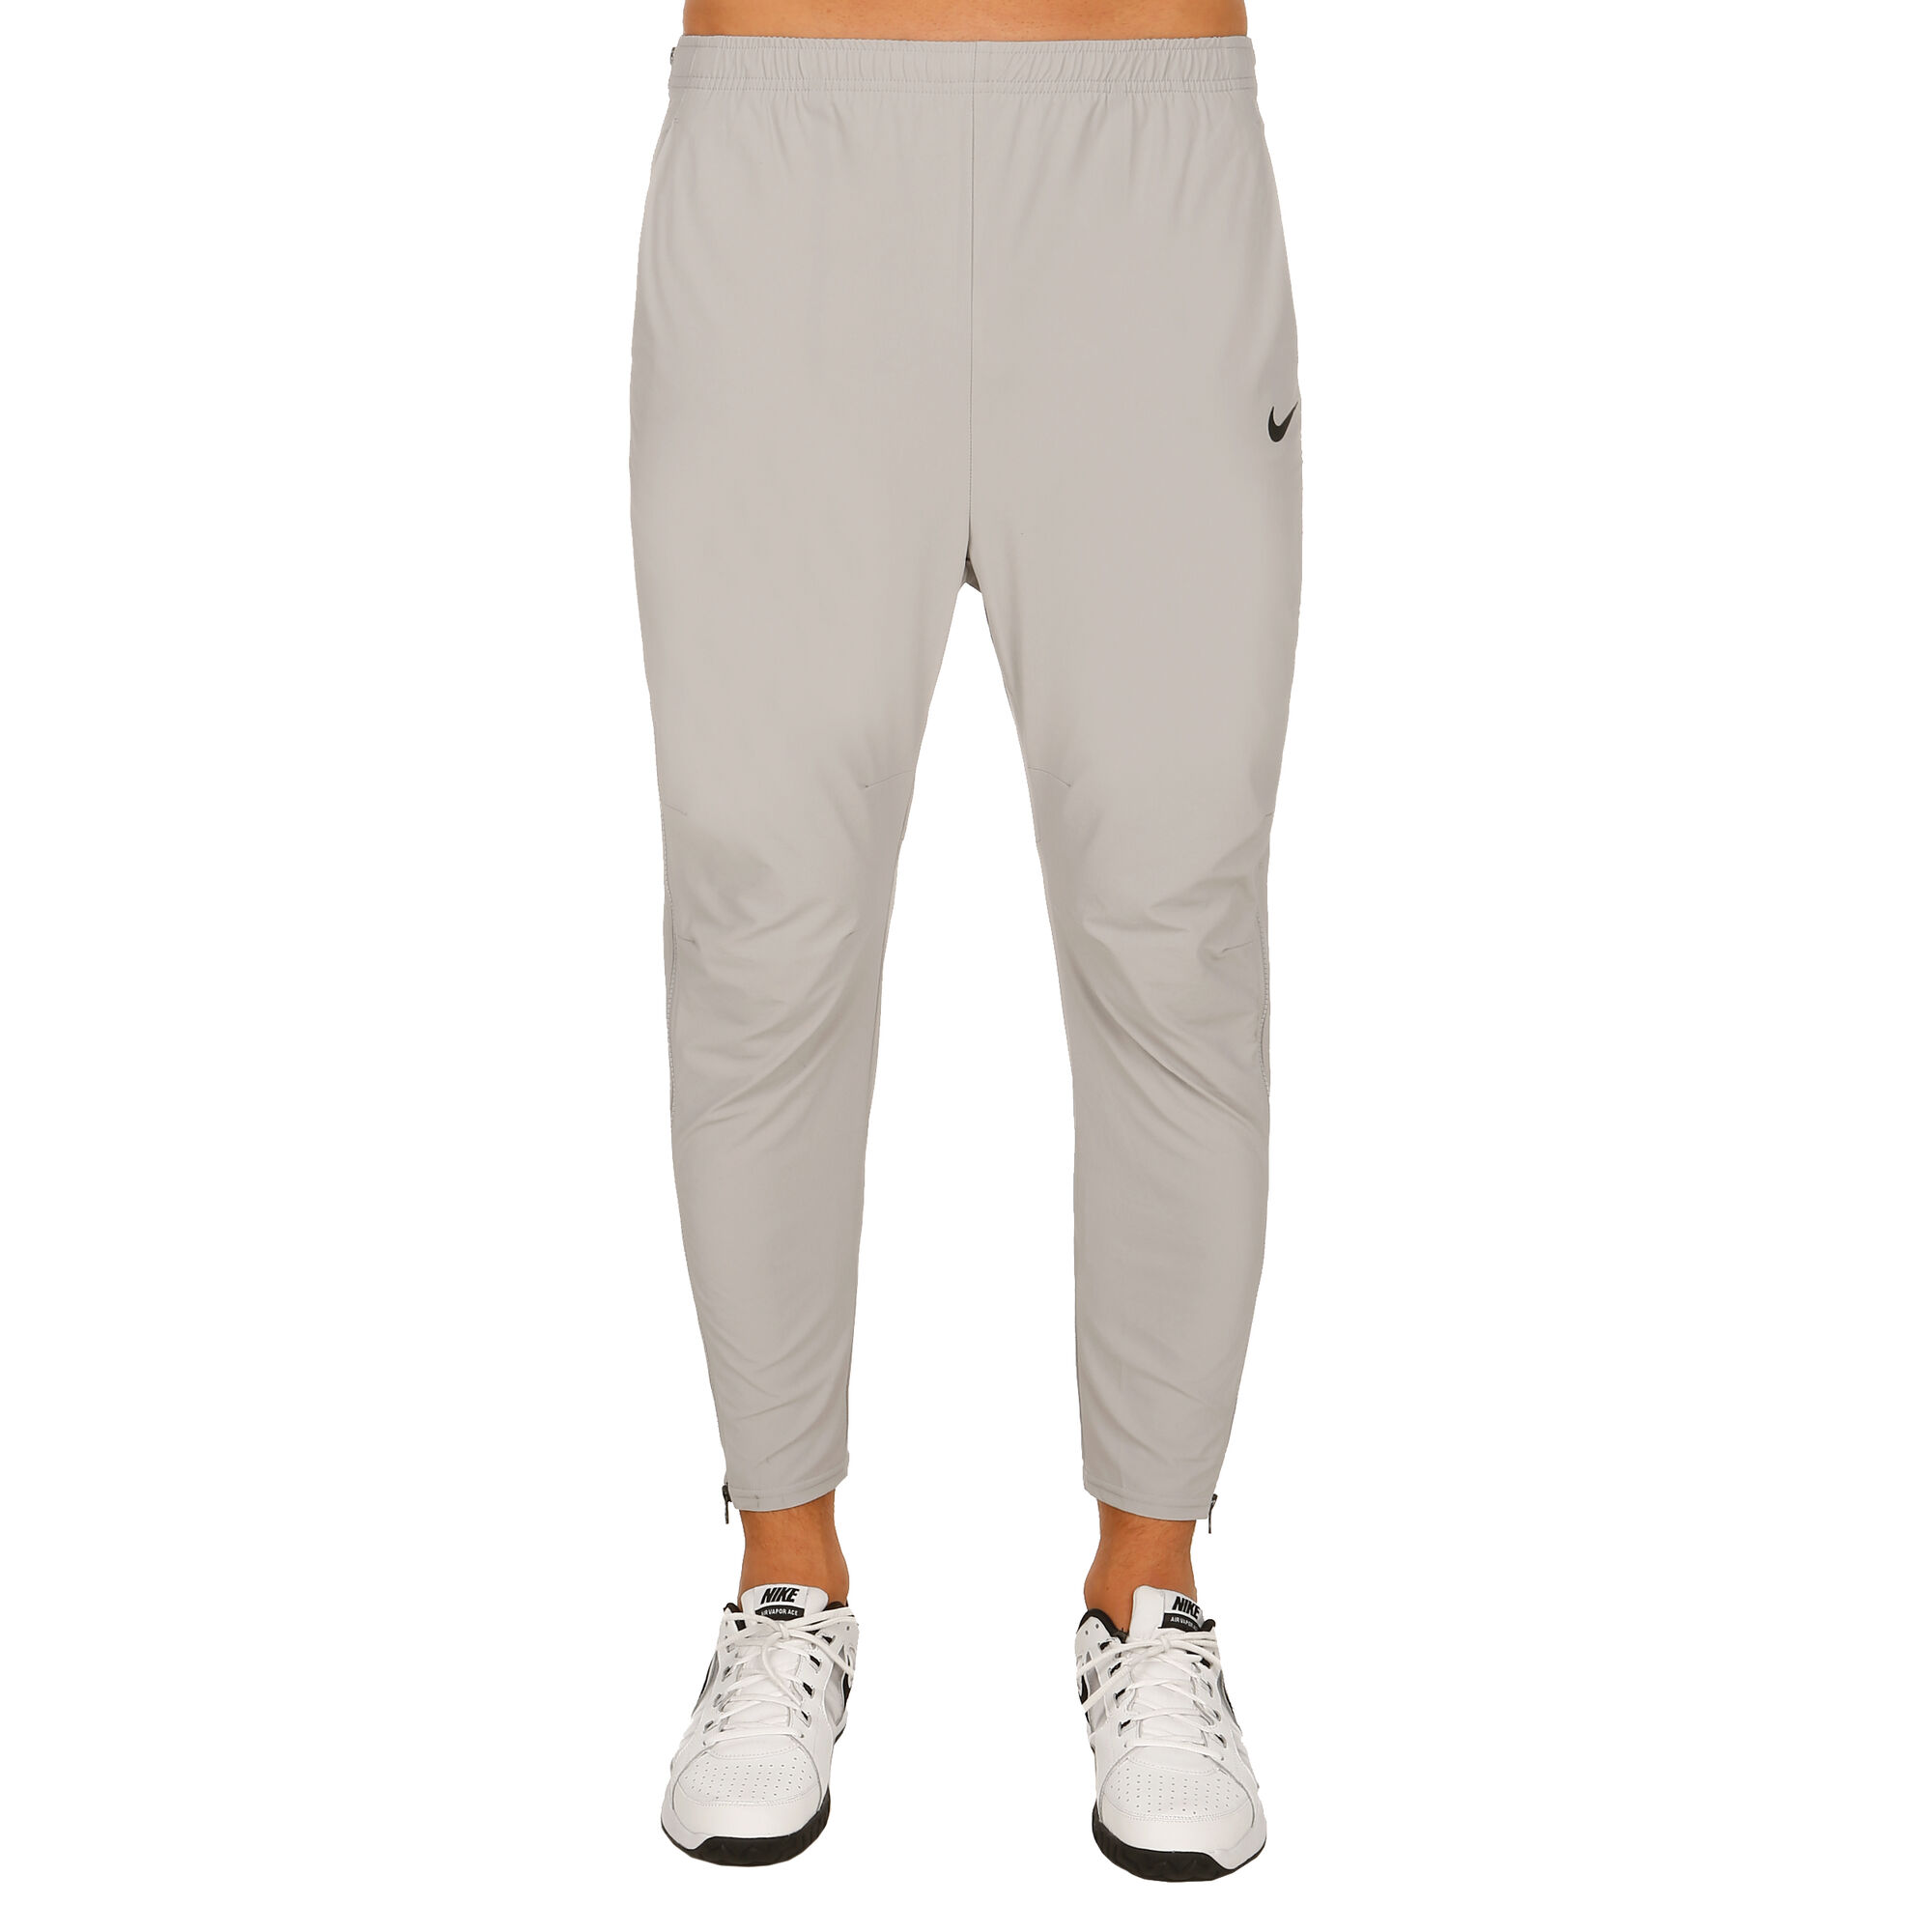 Buy Nike Court Flex Training Pants Men Lightgrey, Black online